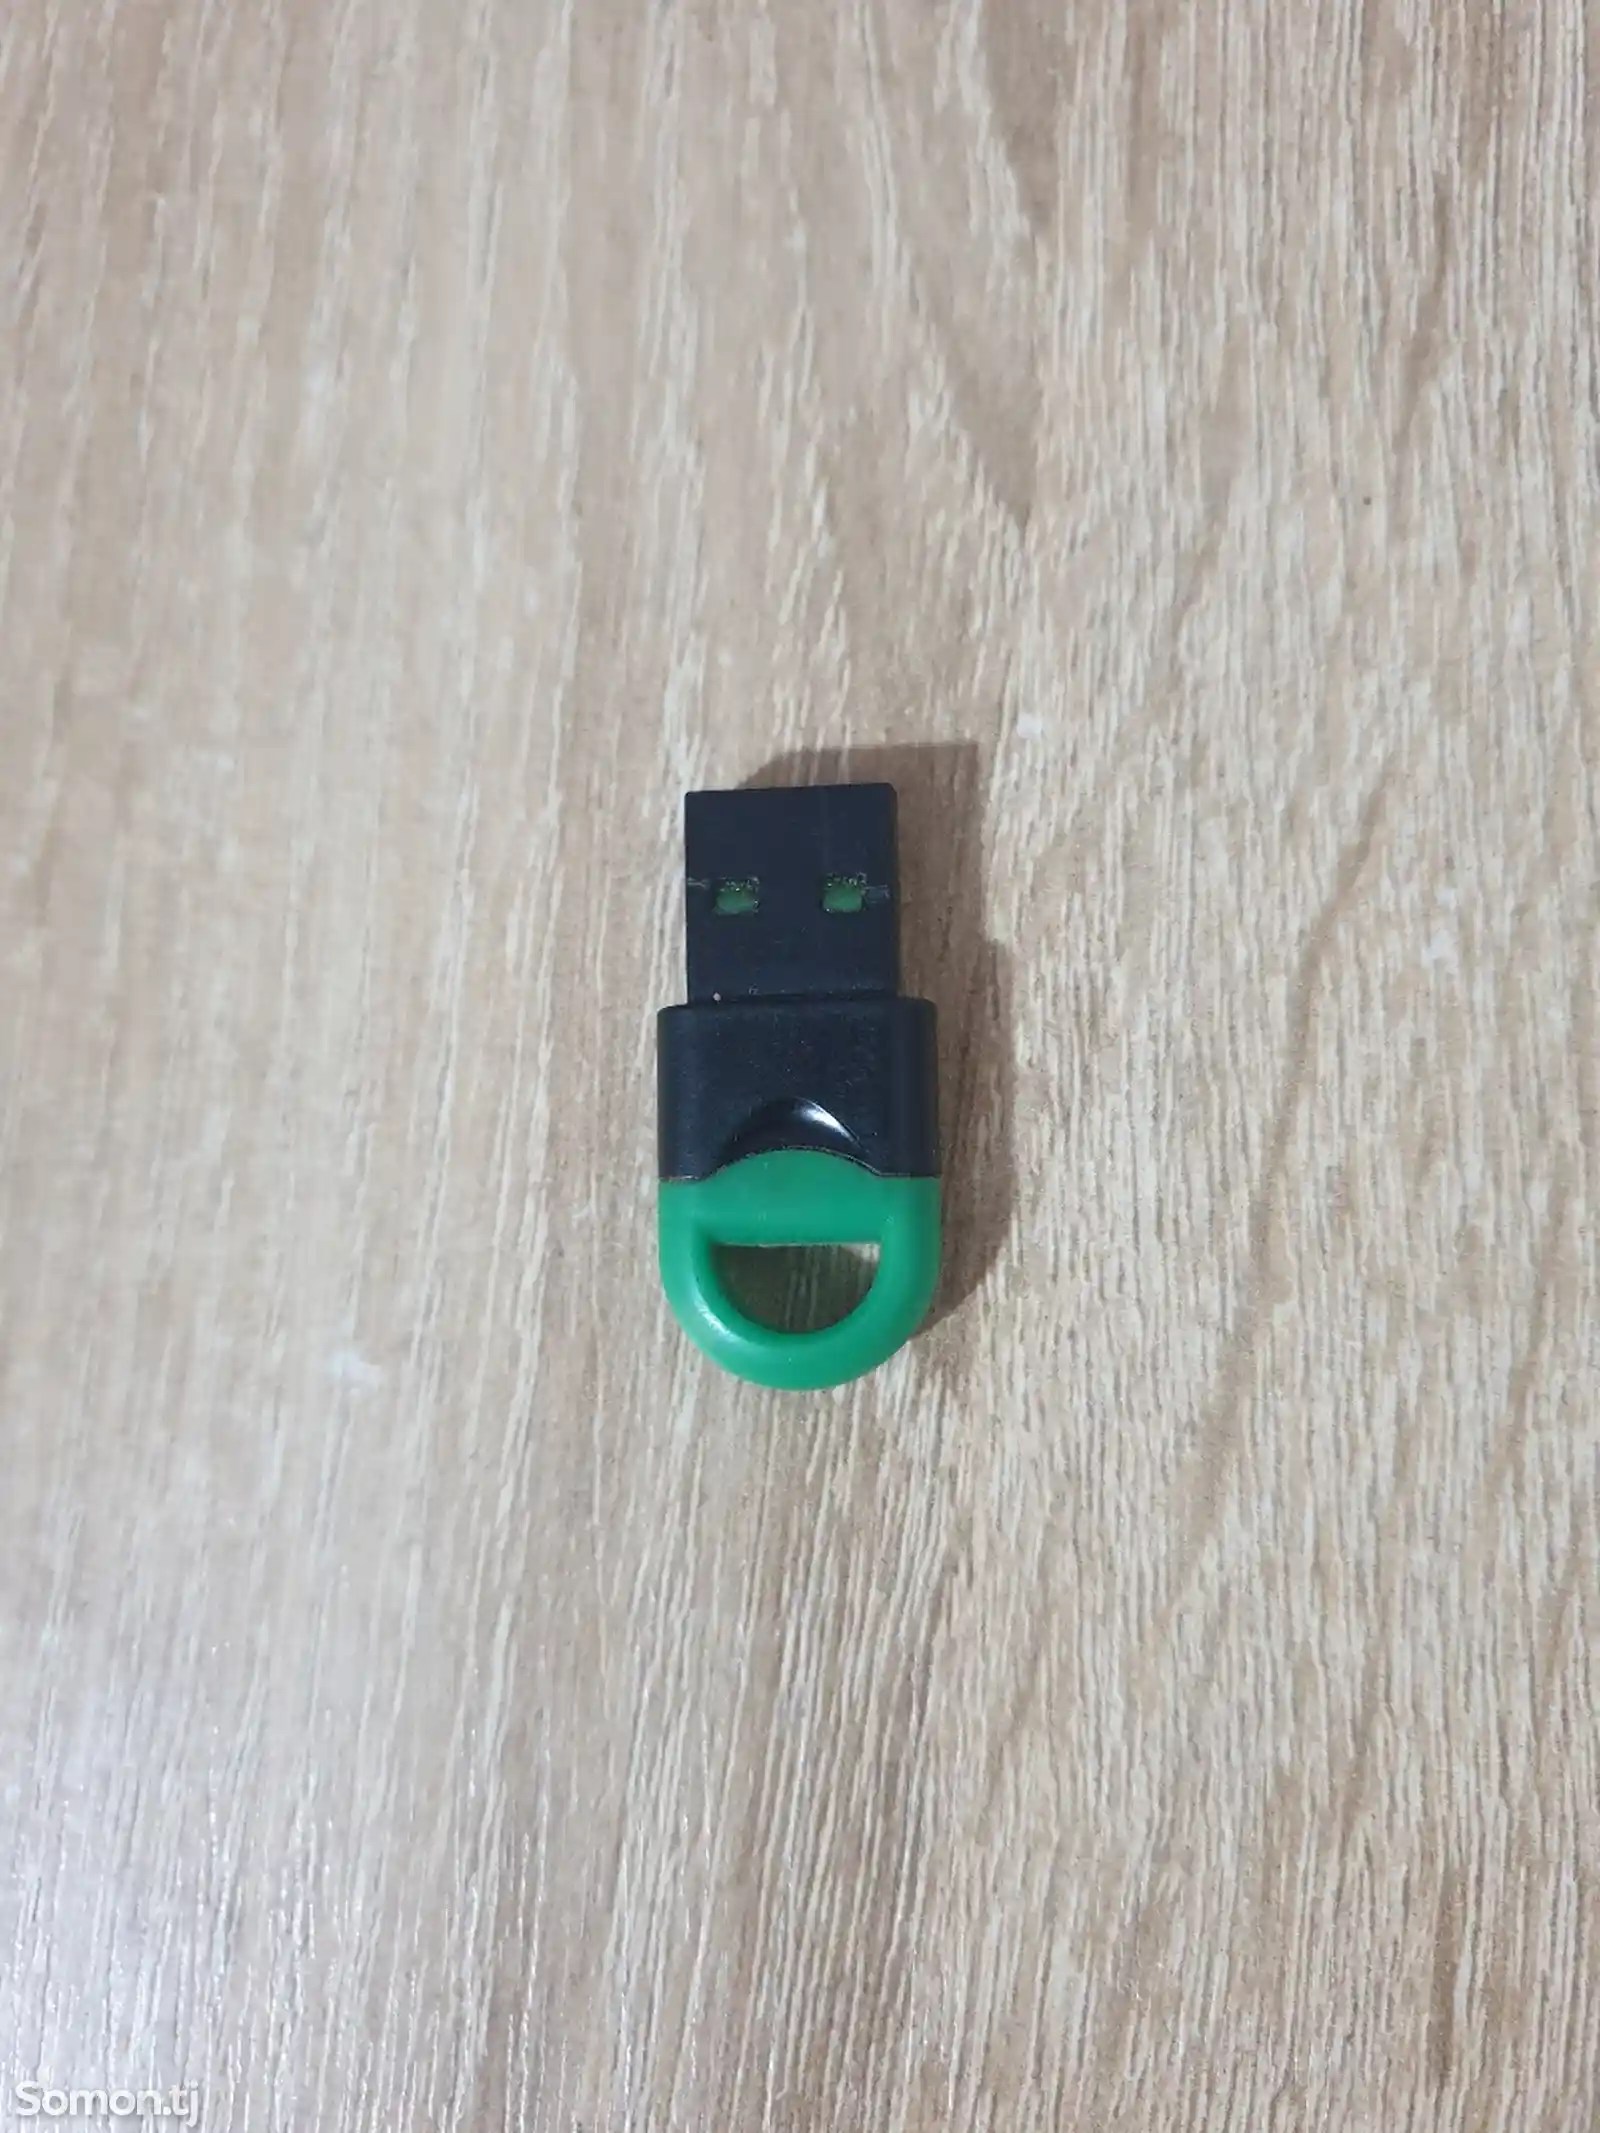 USB-токен JaCarta-2